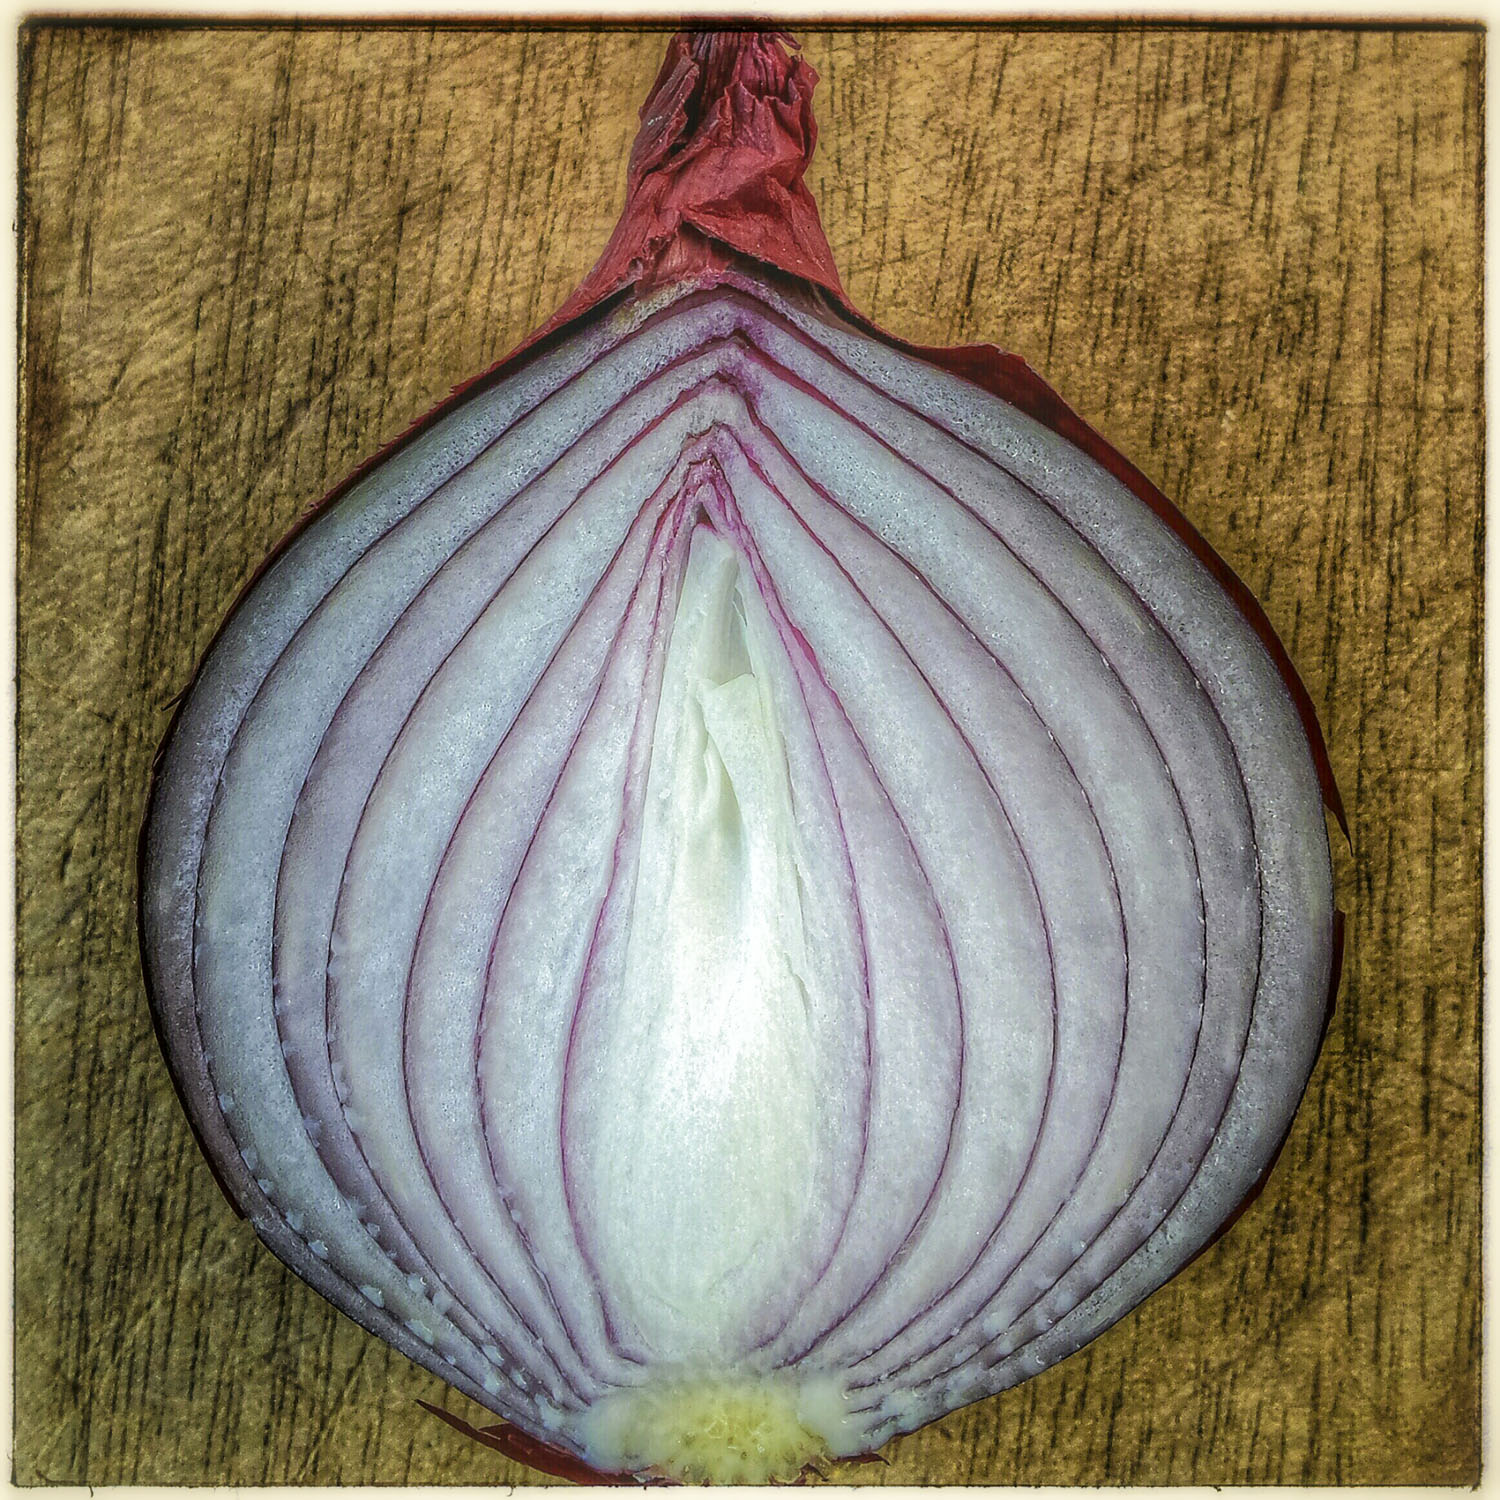 Onion on Board a